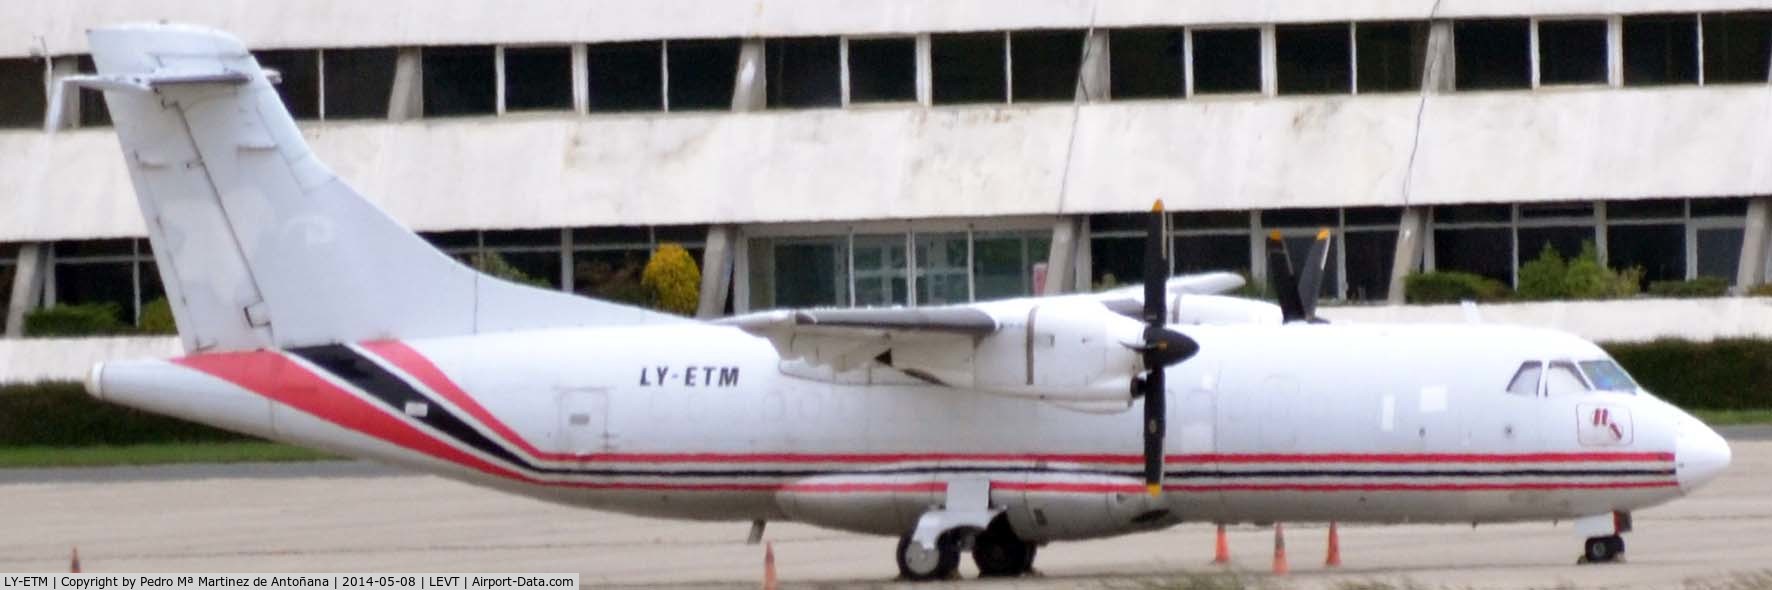 LY-ETM, 1987 ATR 42-300 C/N 067, Aeropuerto de Foronda - Vitoria-Gasteiz